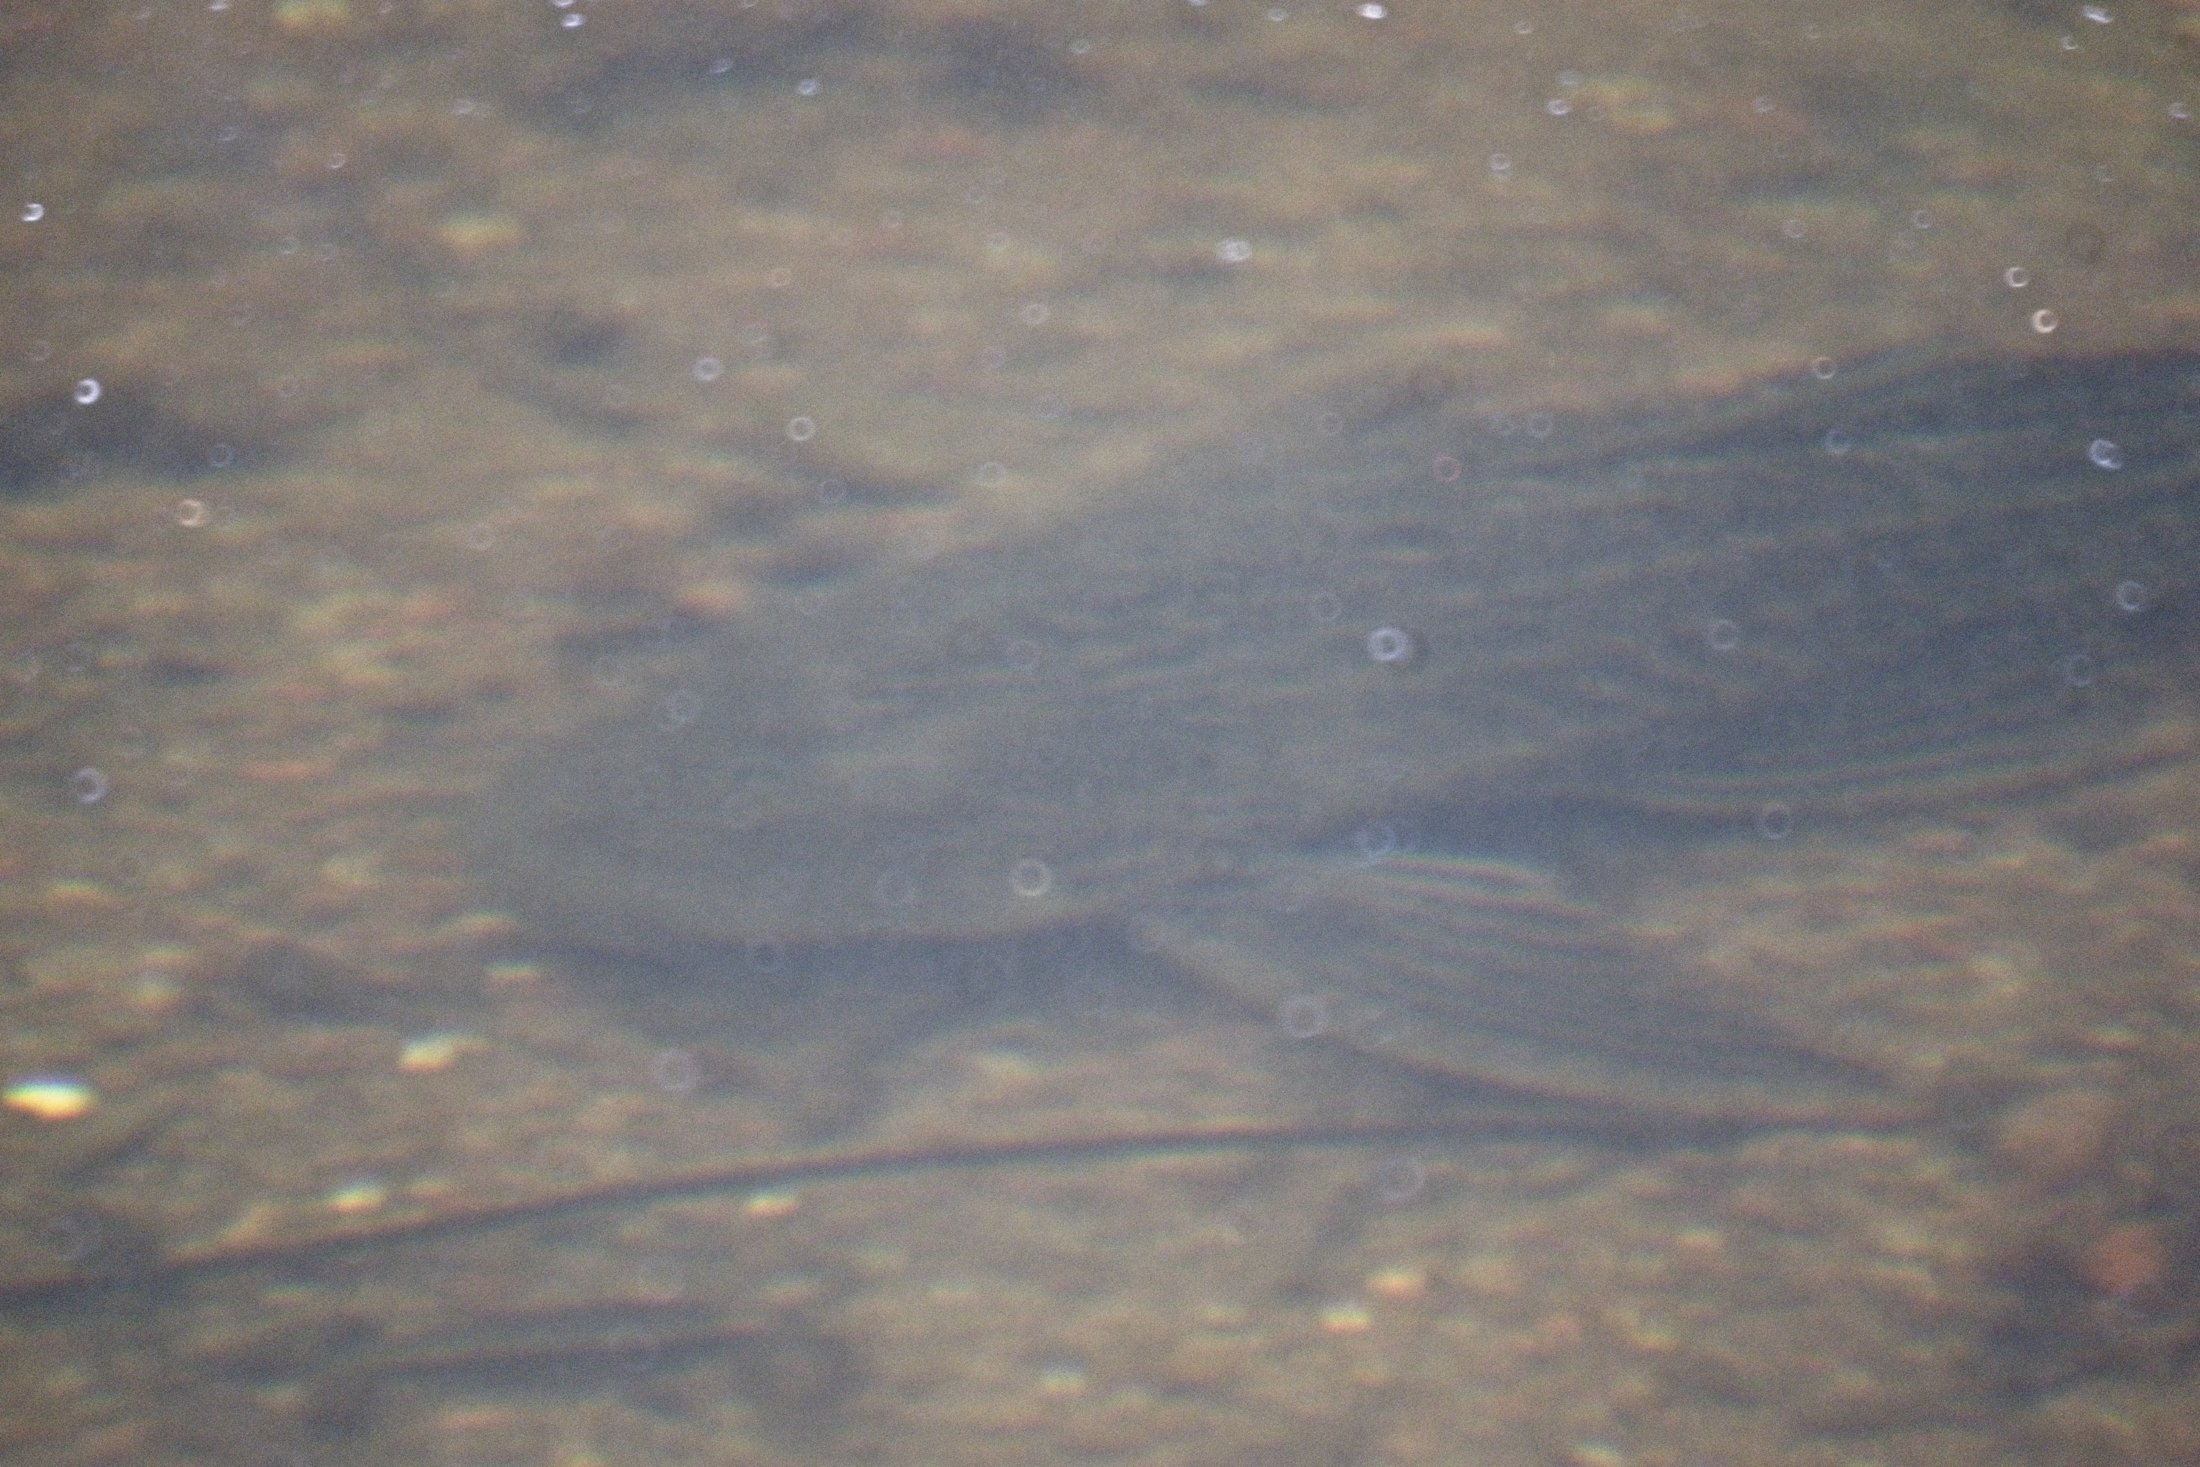 Fish in creek